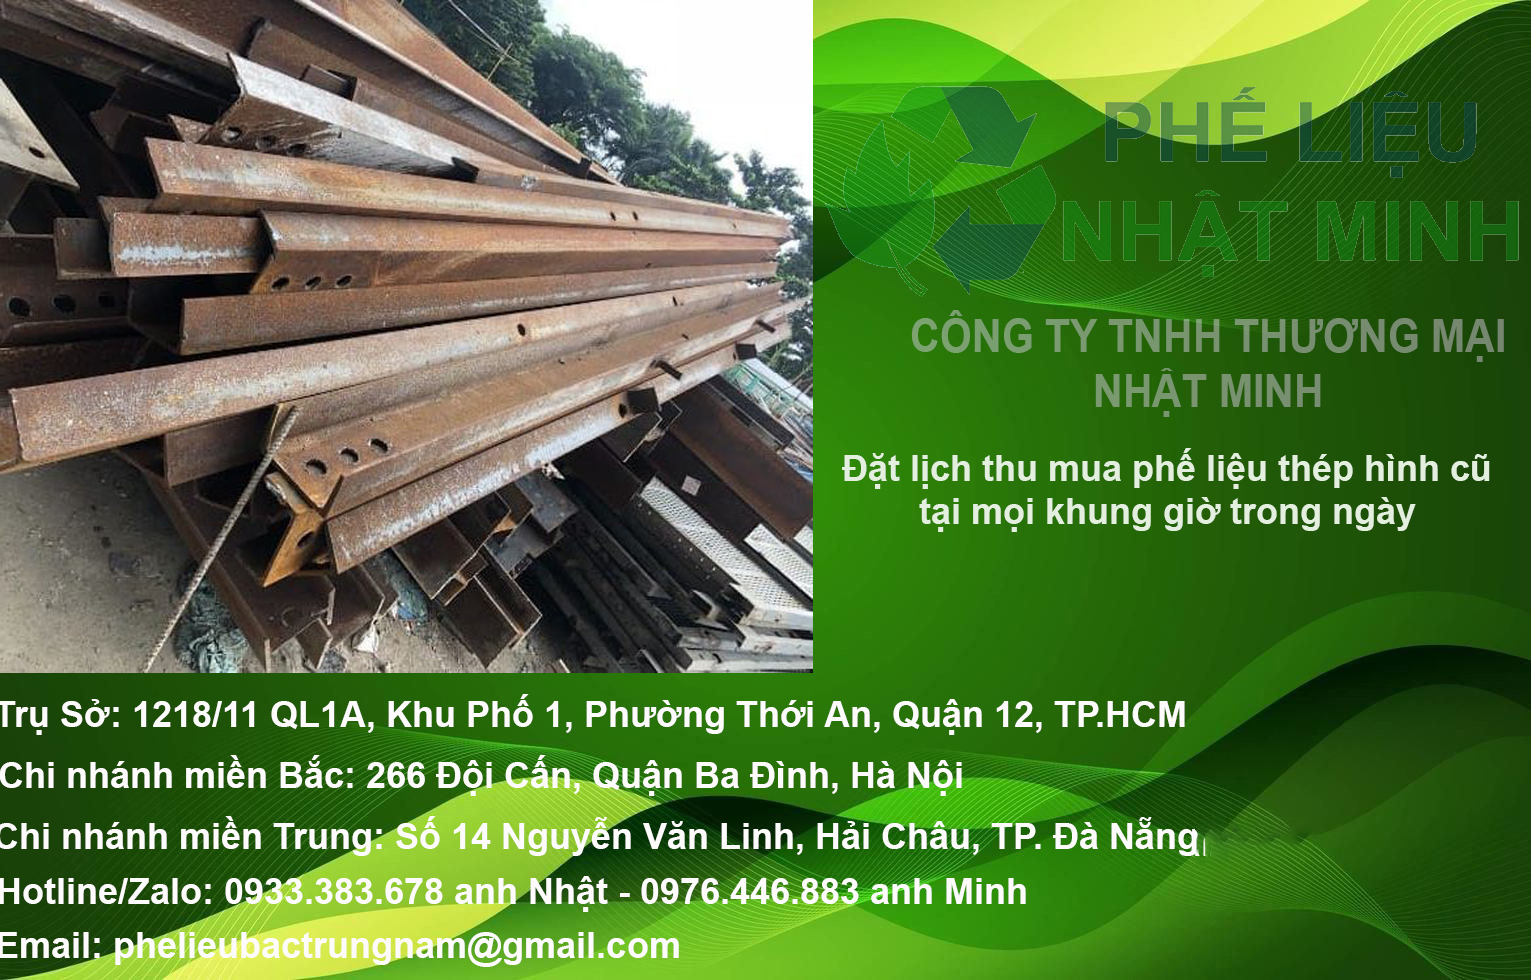 Thep Hinh Phe Lieu Nhat Minh Company